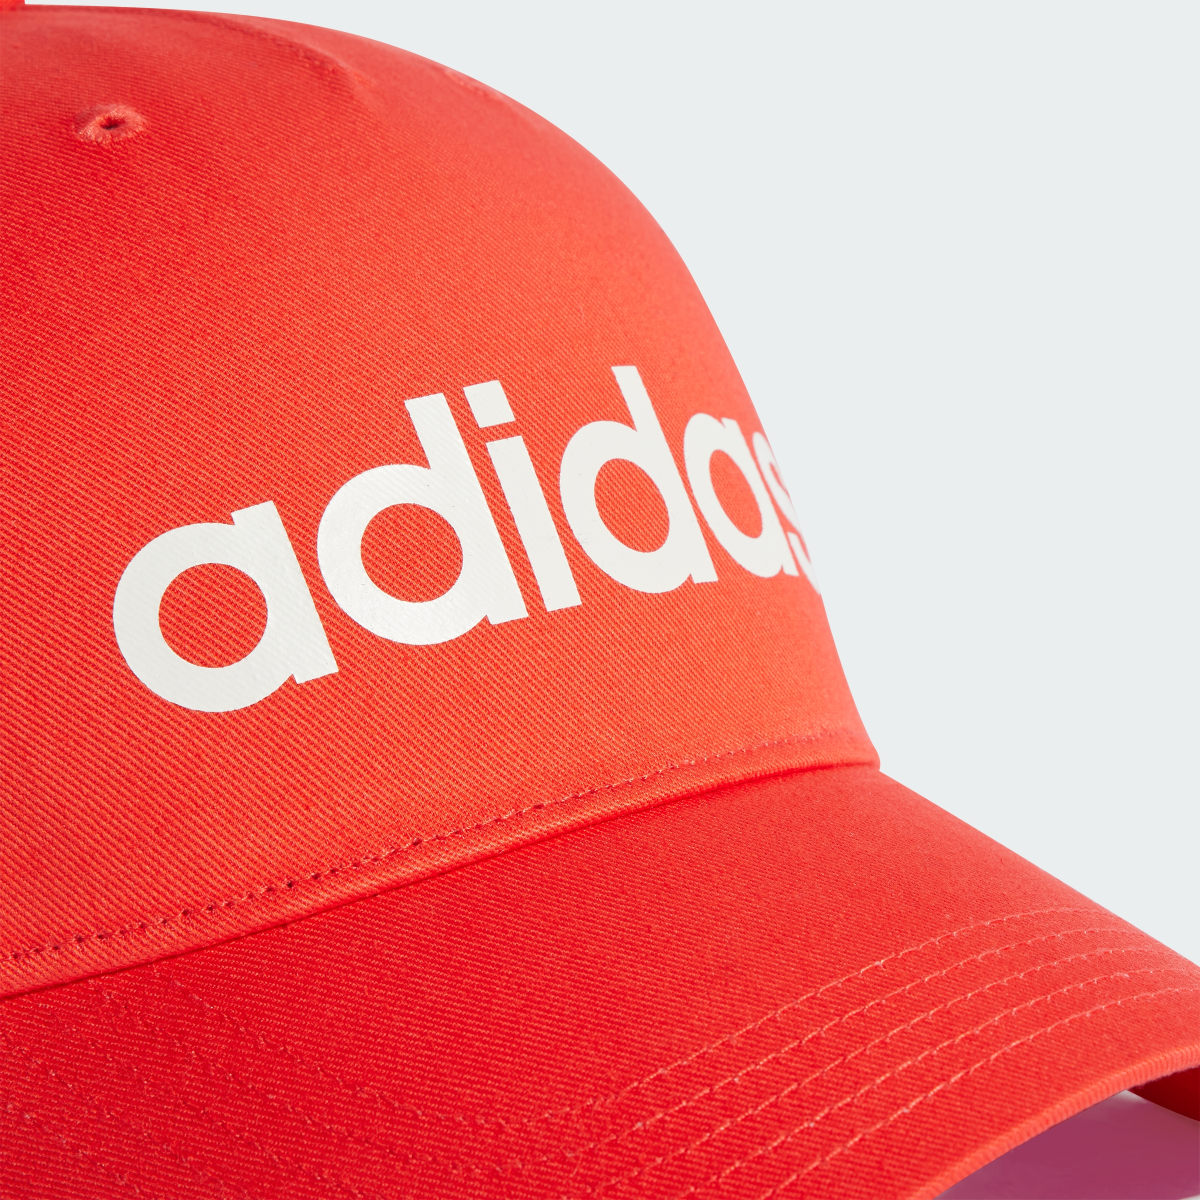 Adidas DAILY CAP. 4